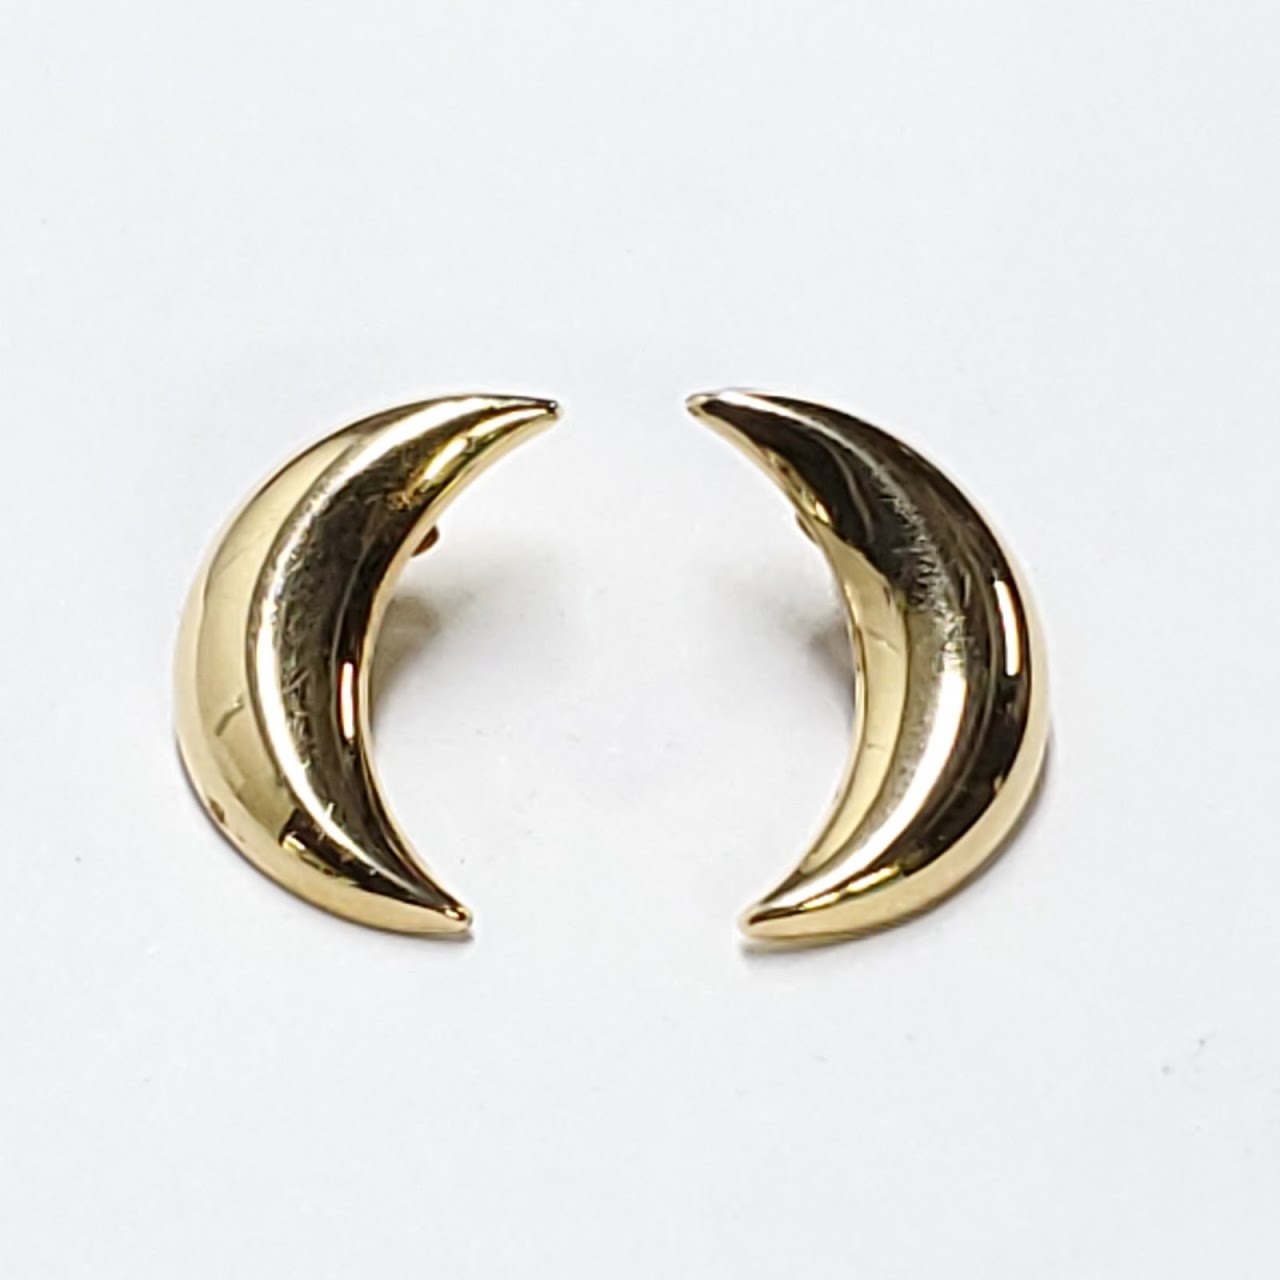 14K Gold Crescent Moon Earrings